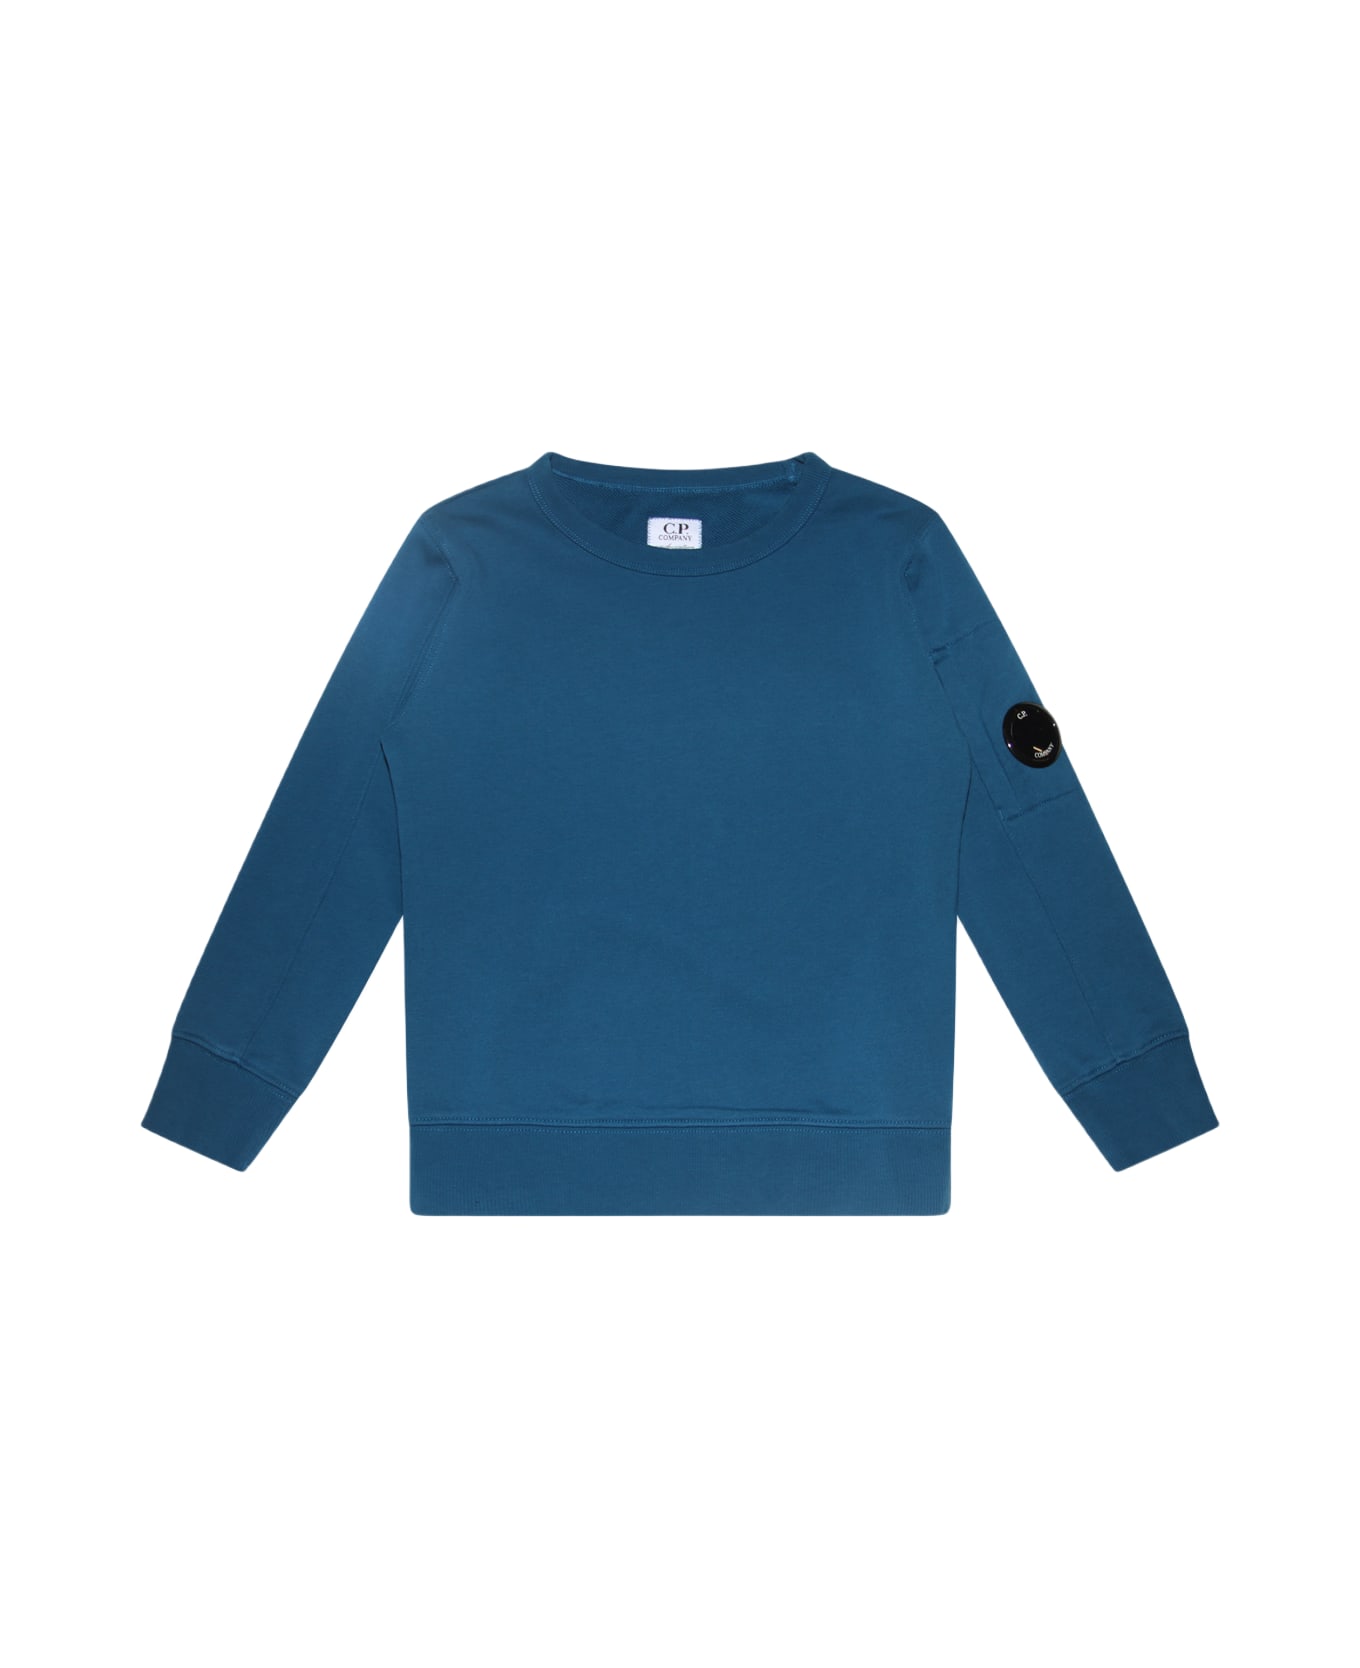 C.P. Company Blue Cotton Sweatshirt - INK BLUE